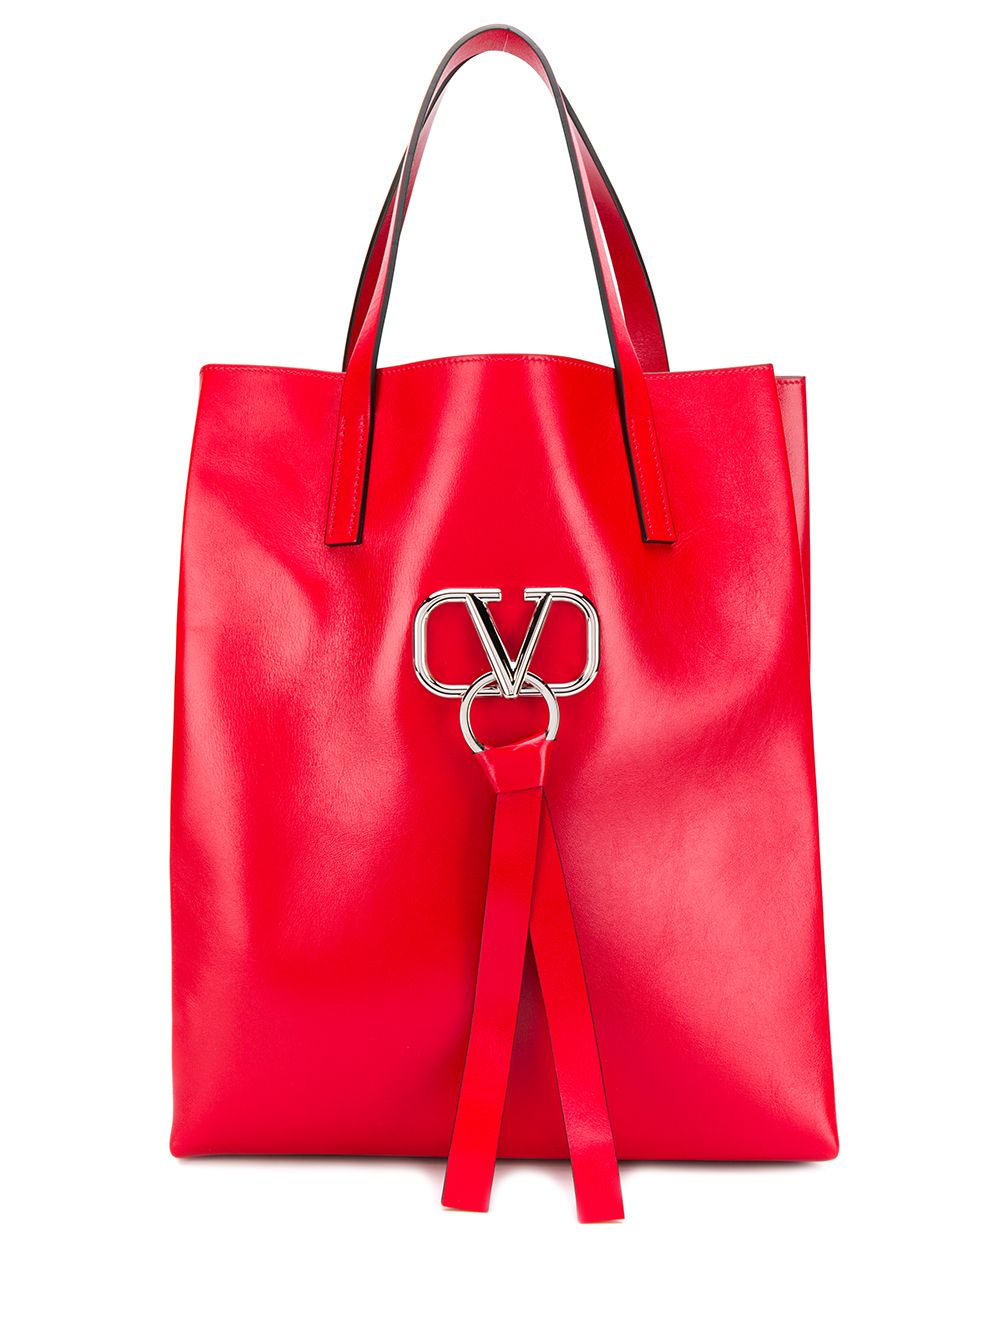 фото Valentino сумка-тоут valentino garavani с декором vring